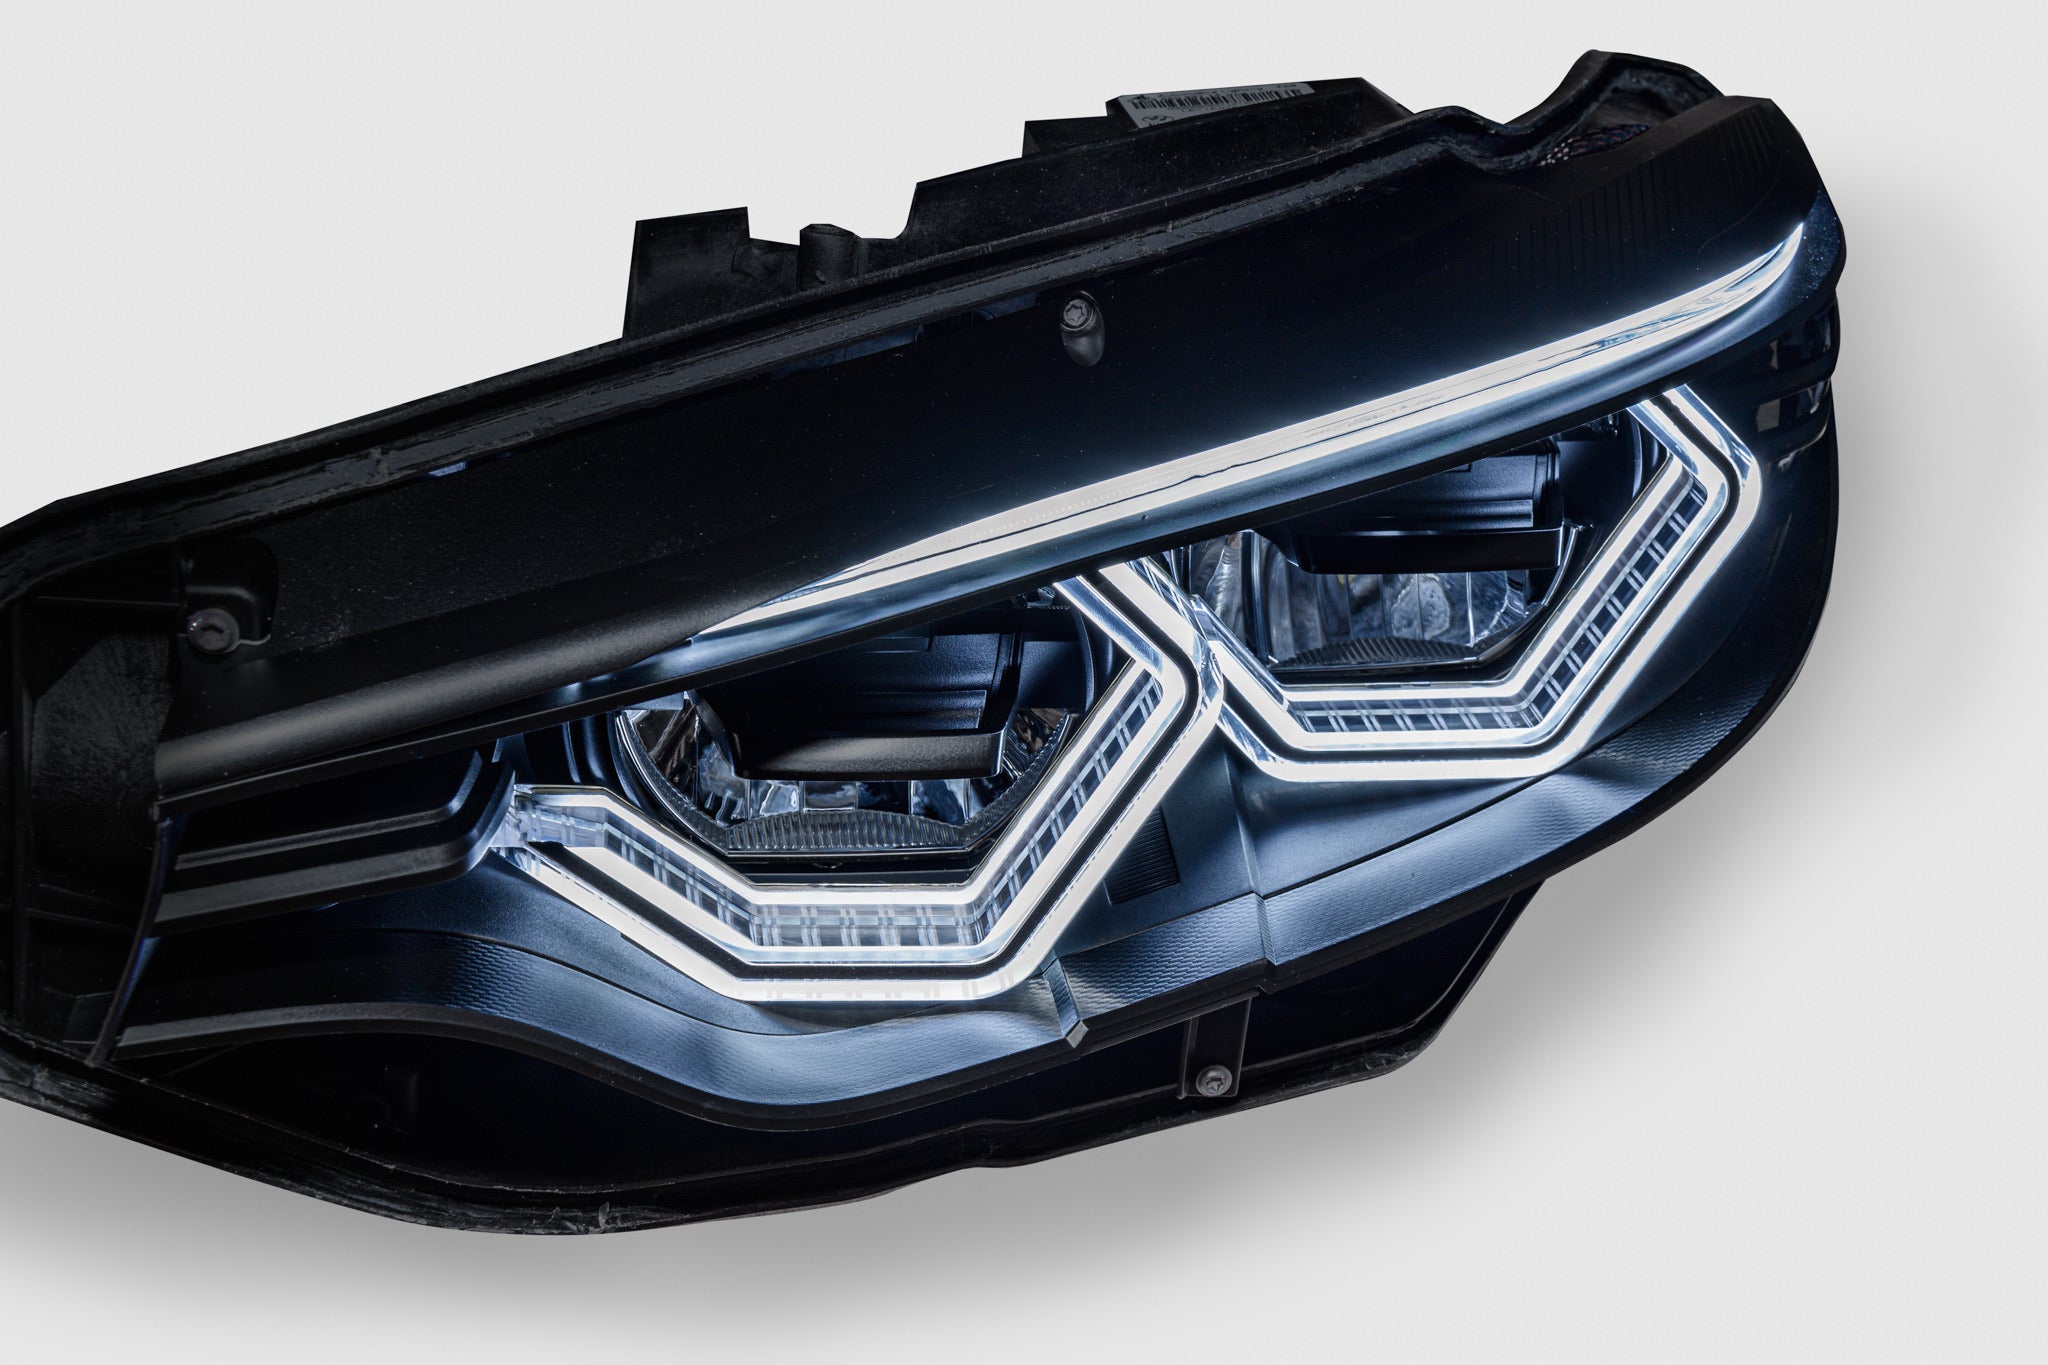 F8x F80 M3 F82 F83 M4 F32 Coupe F36 Gran Coupe Vision Concept Headlight Retrofit (2014 - 2017 LED Headlights Only)